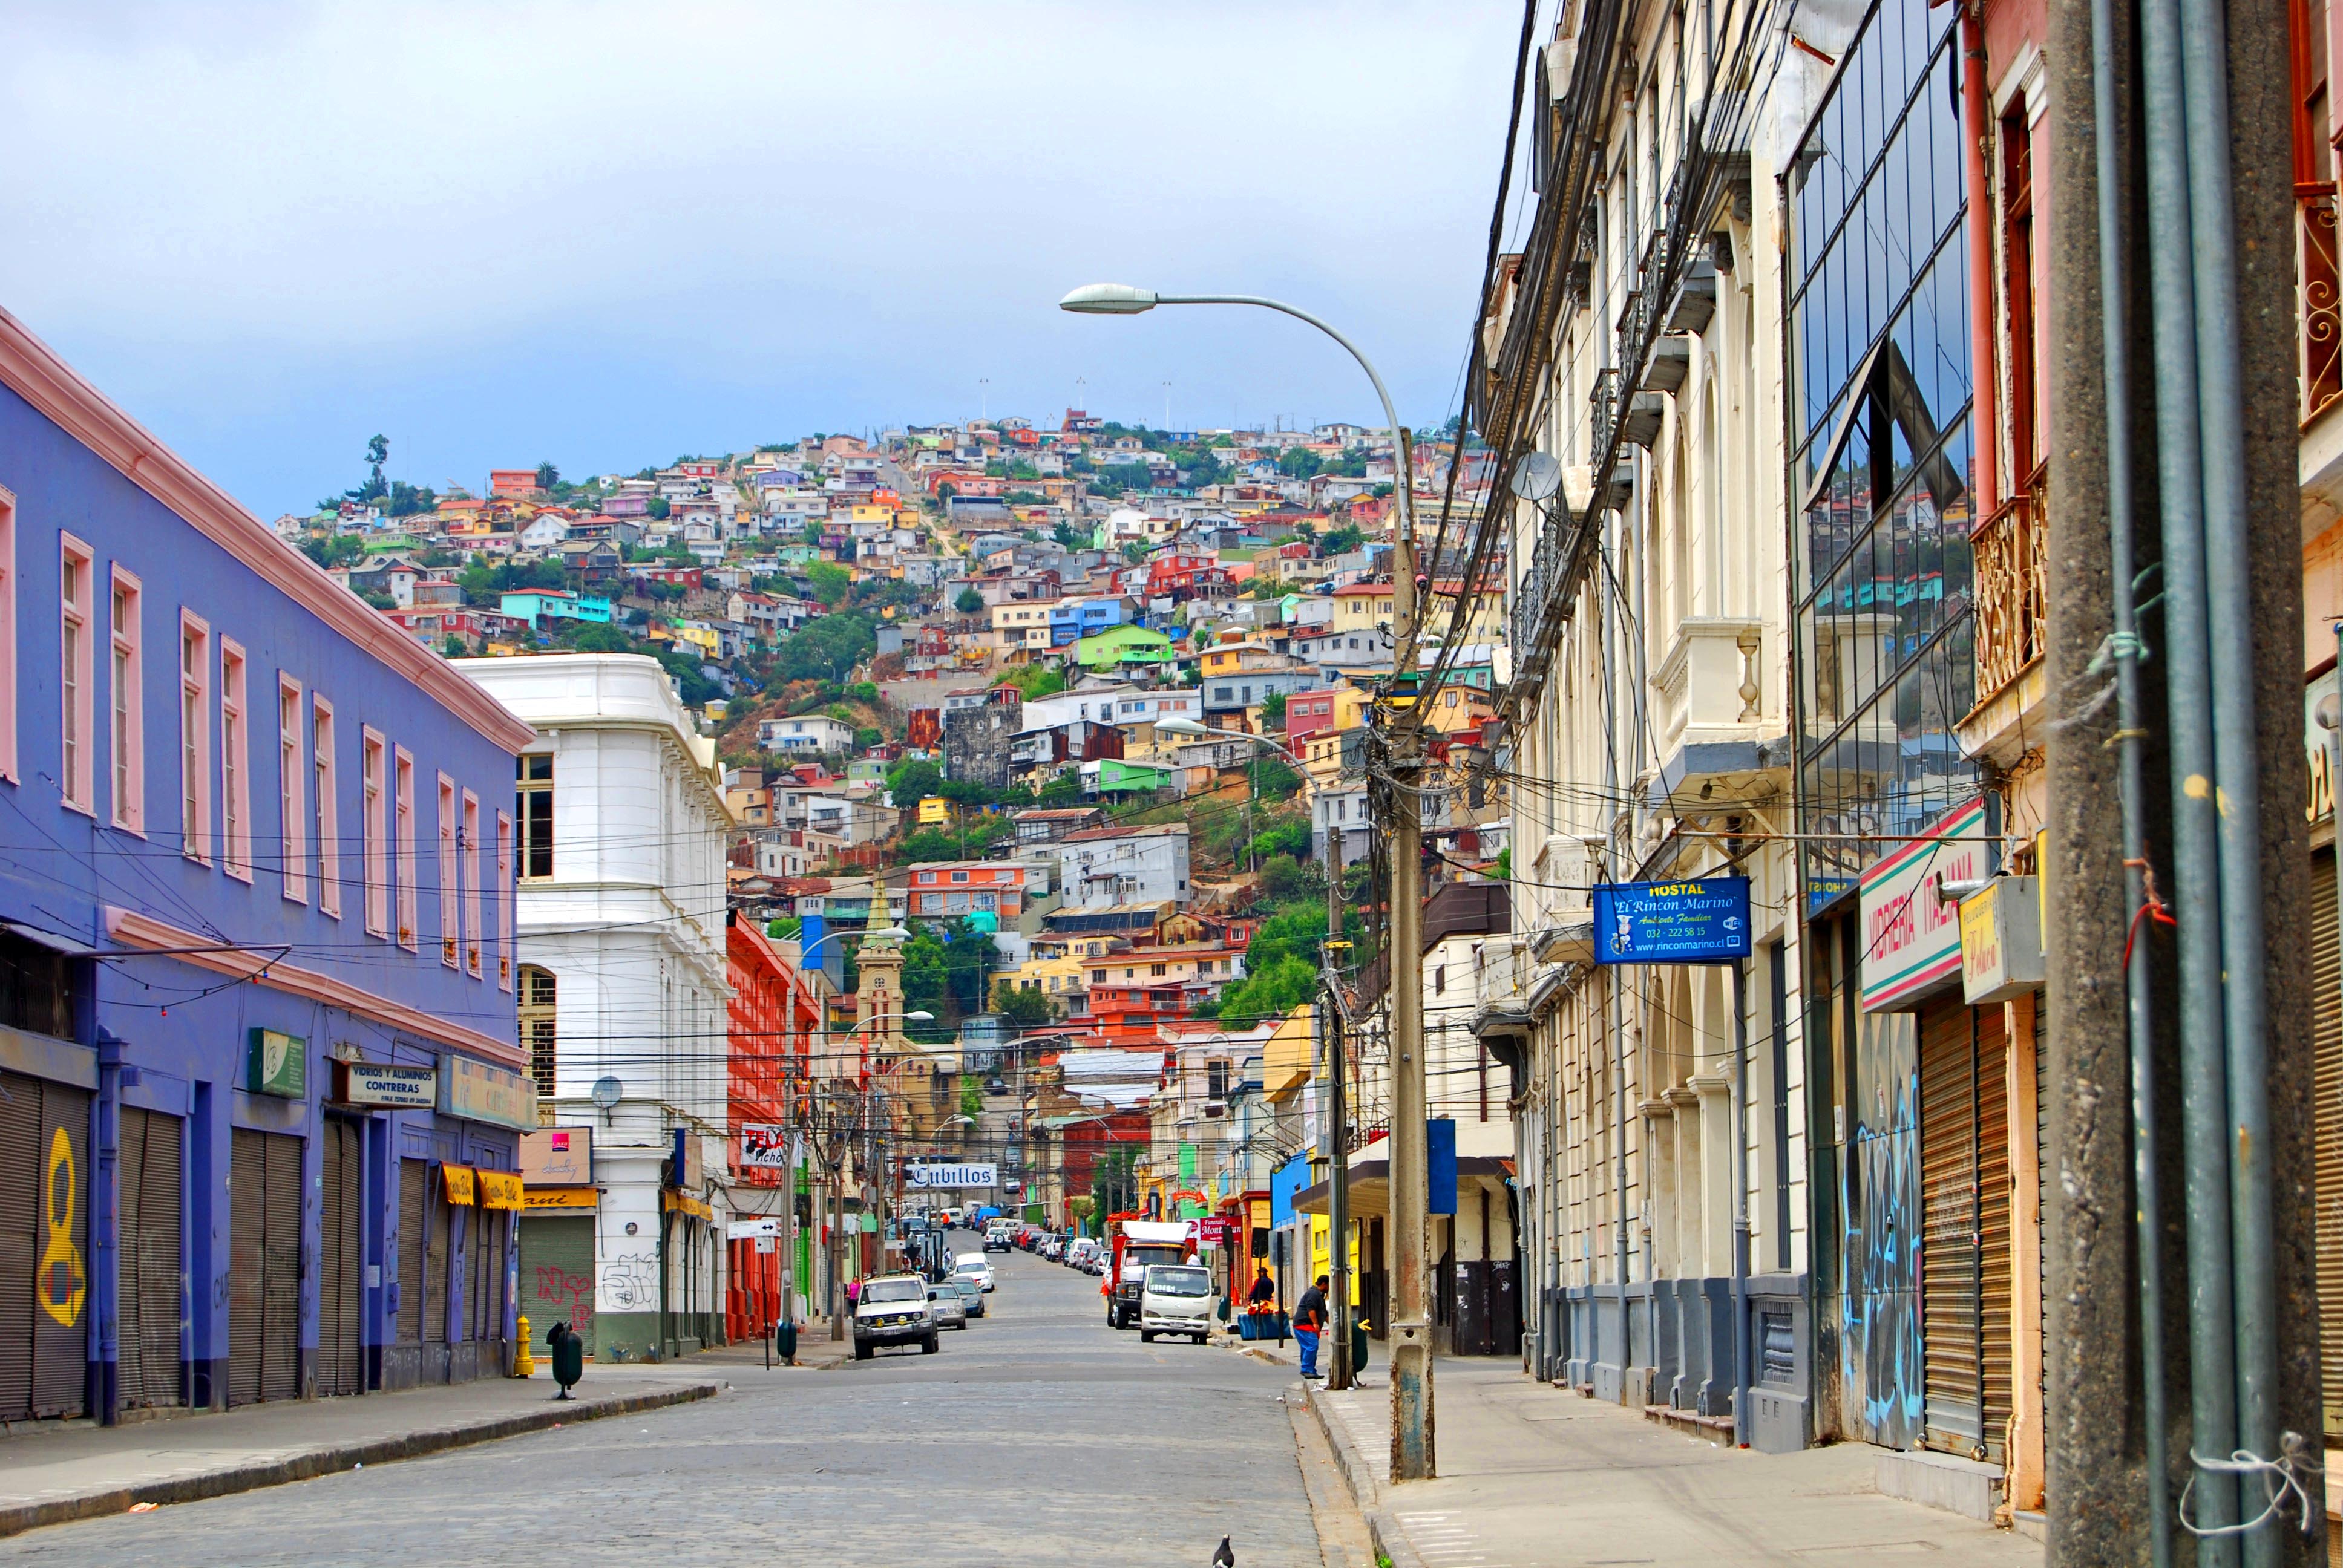 Photography: 1 Dream Day at Valparaíso